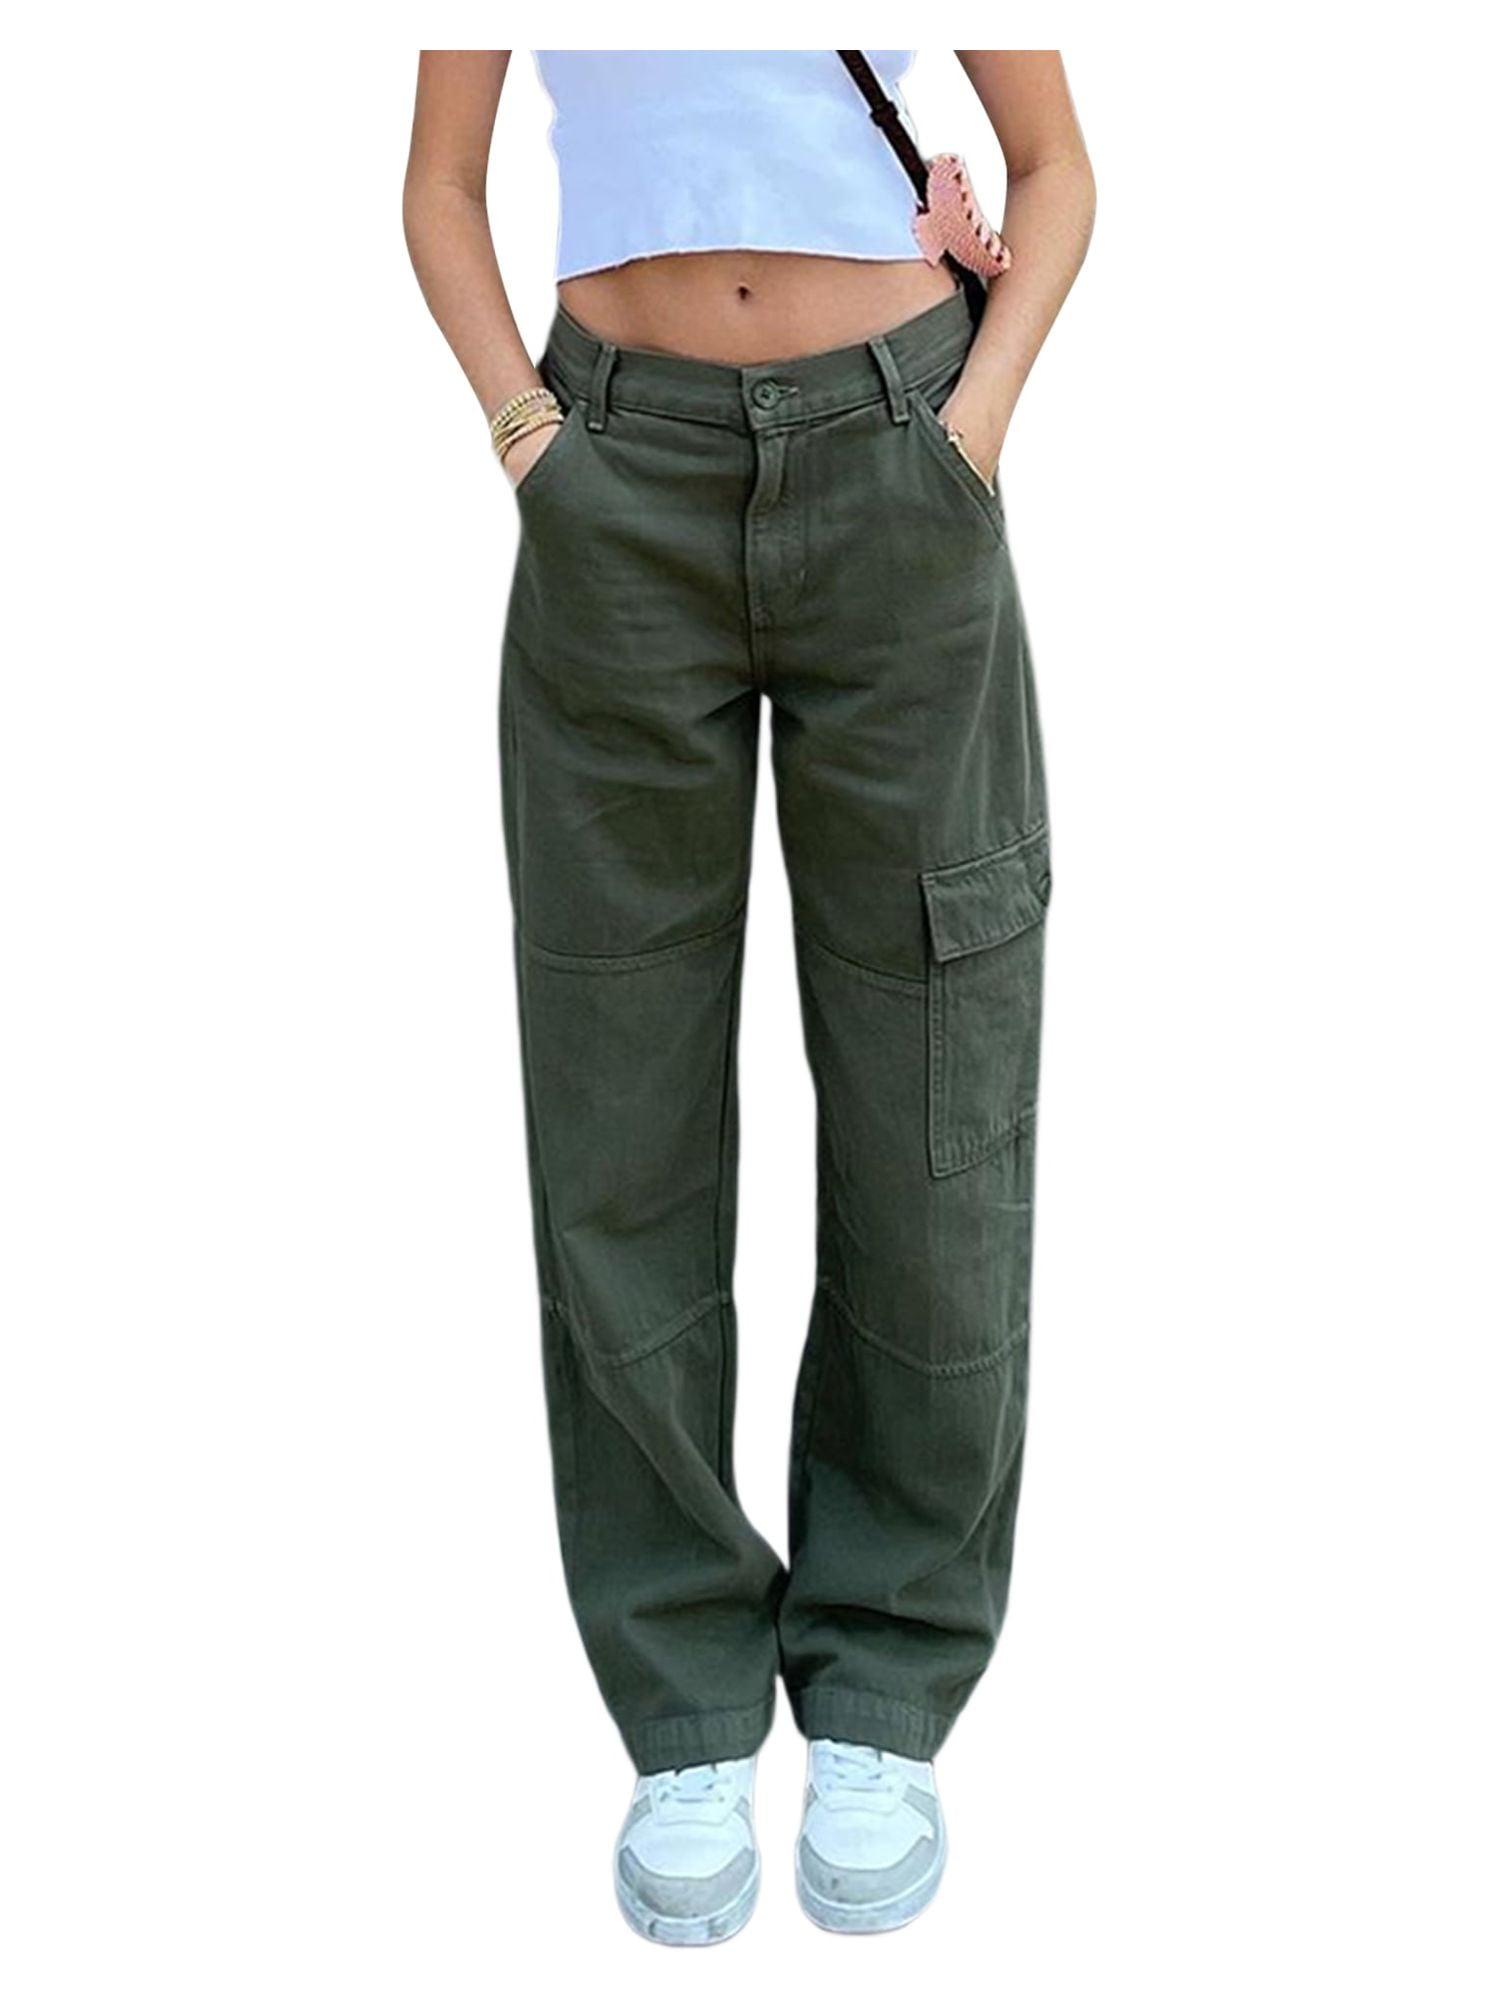 Women & Girls Denim Cargo Jeans & Pants Jogger Style Slim Fit